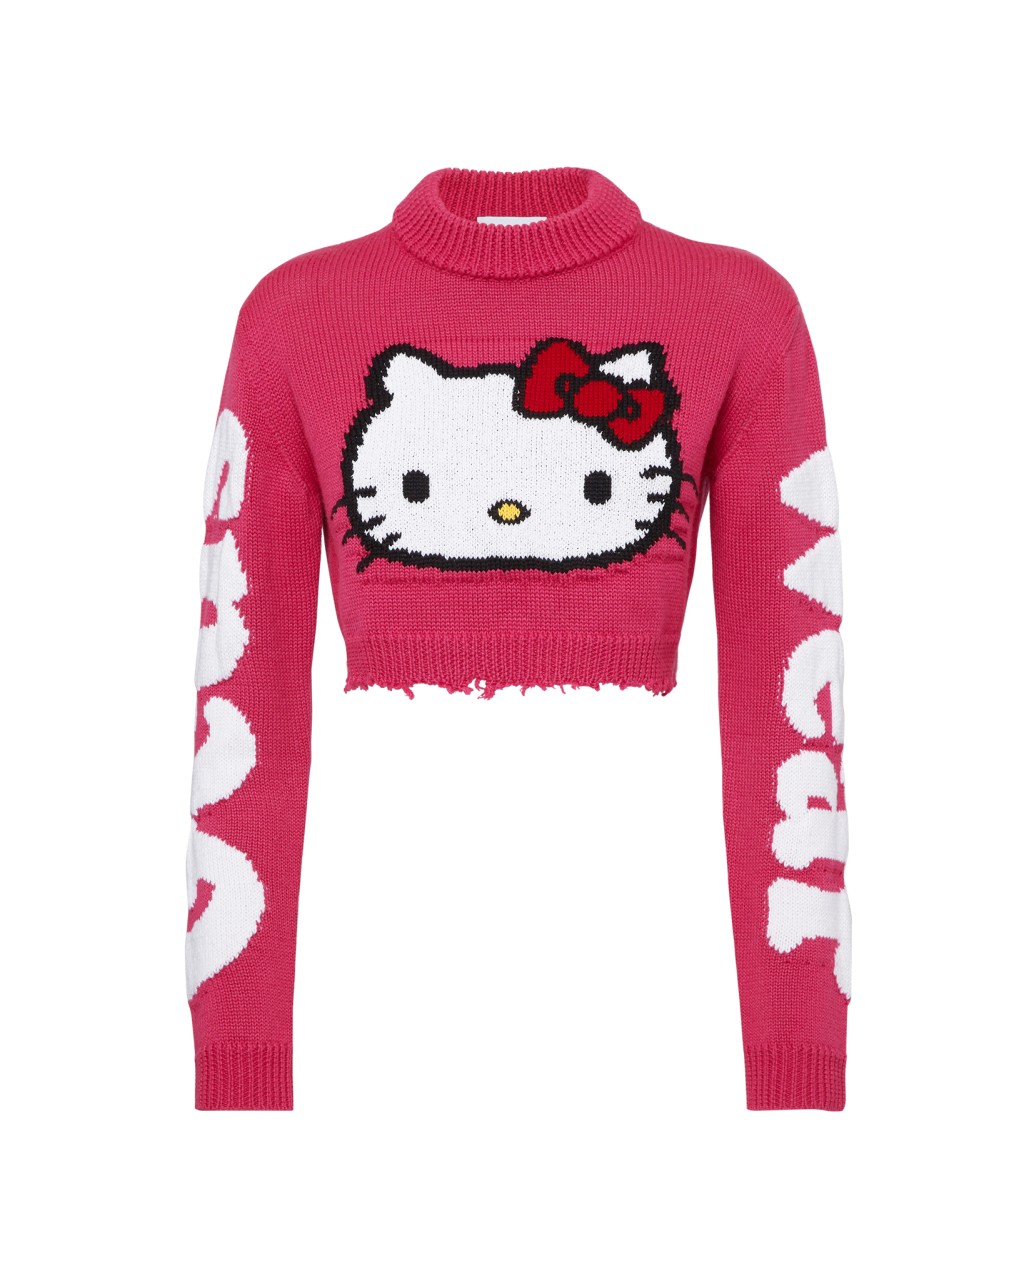 GCDS X Hello Kitty短身不修邊針織上衣/$4,390。